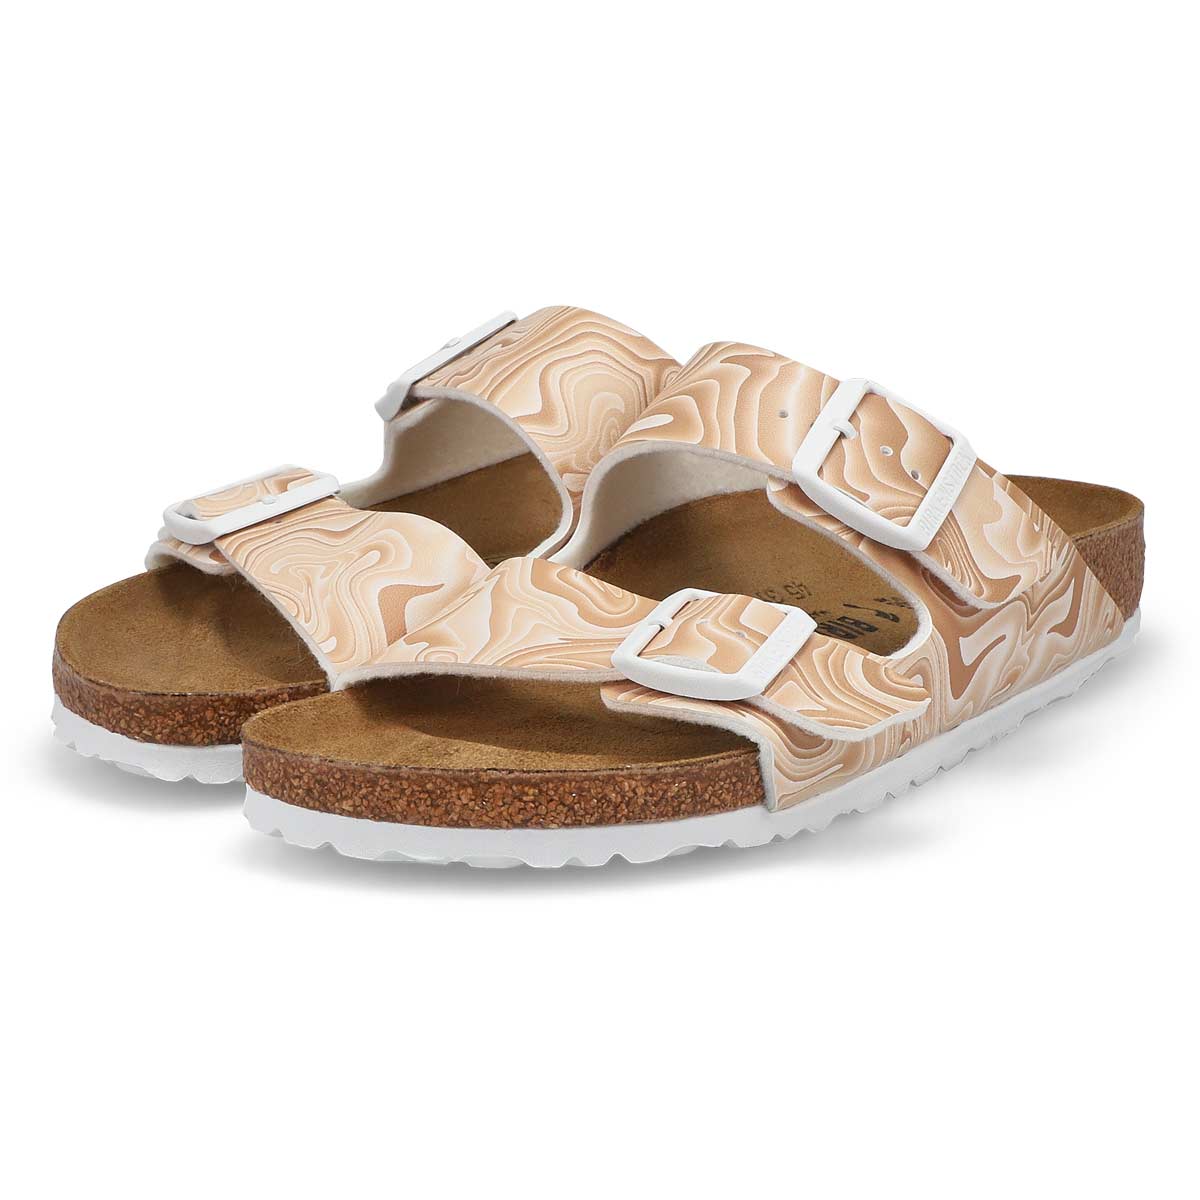 Women's Arizona Birko-Flor 2-Strap Narrow Sandal - Sand/White